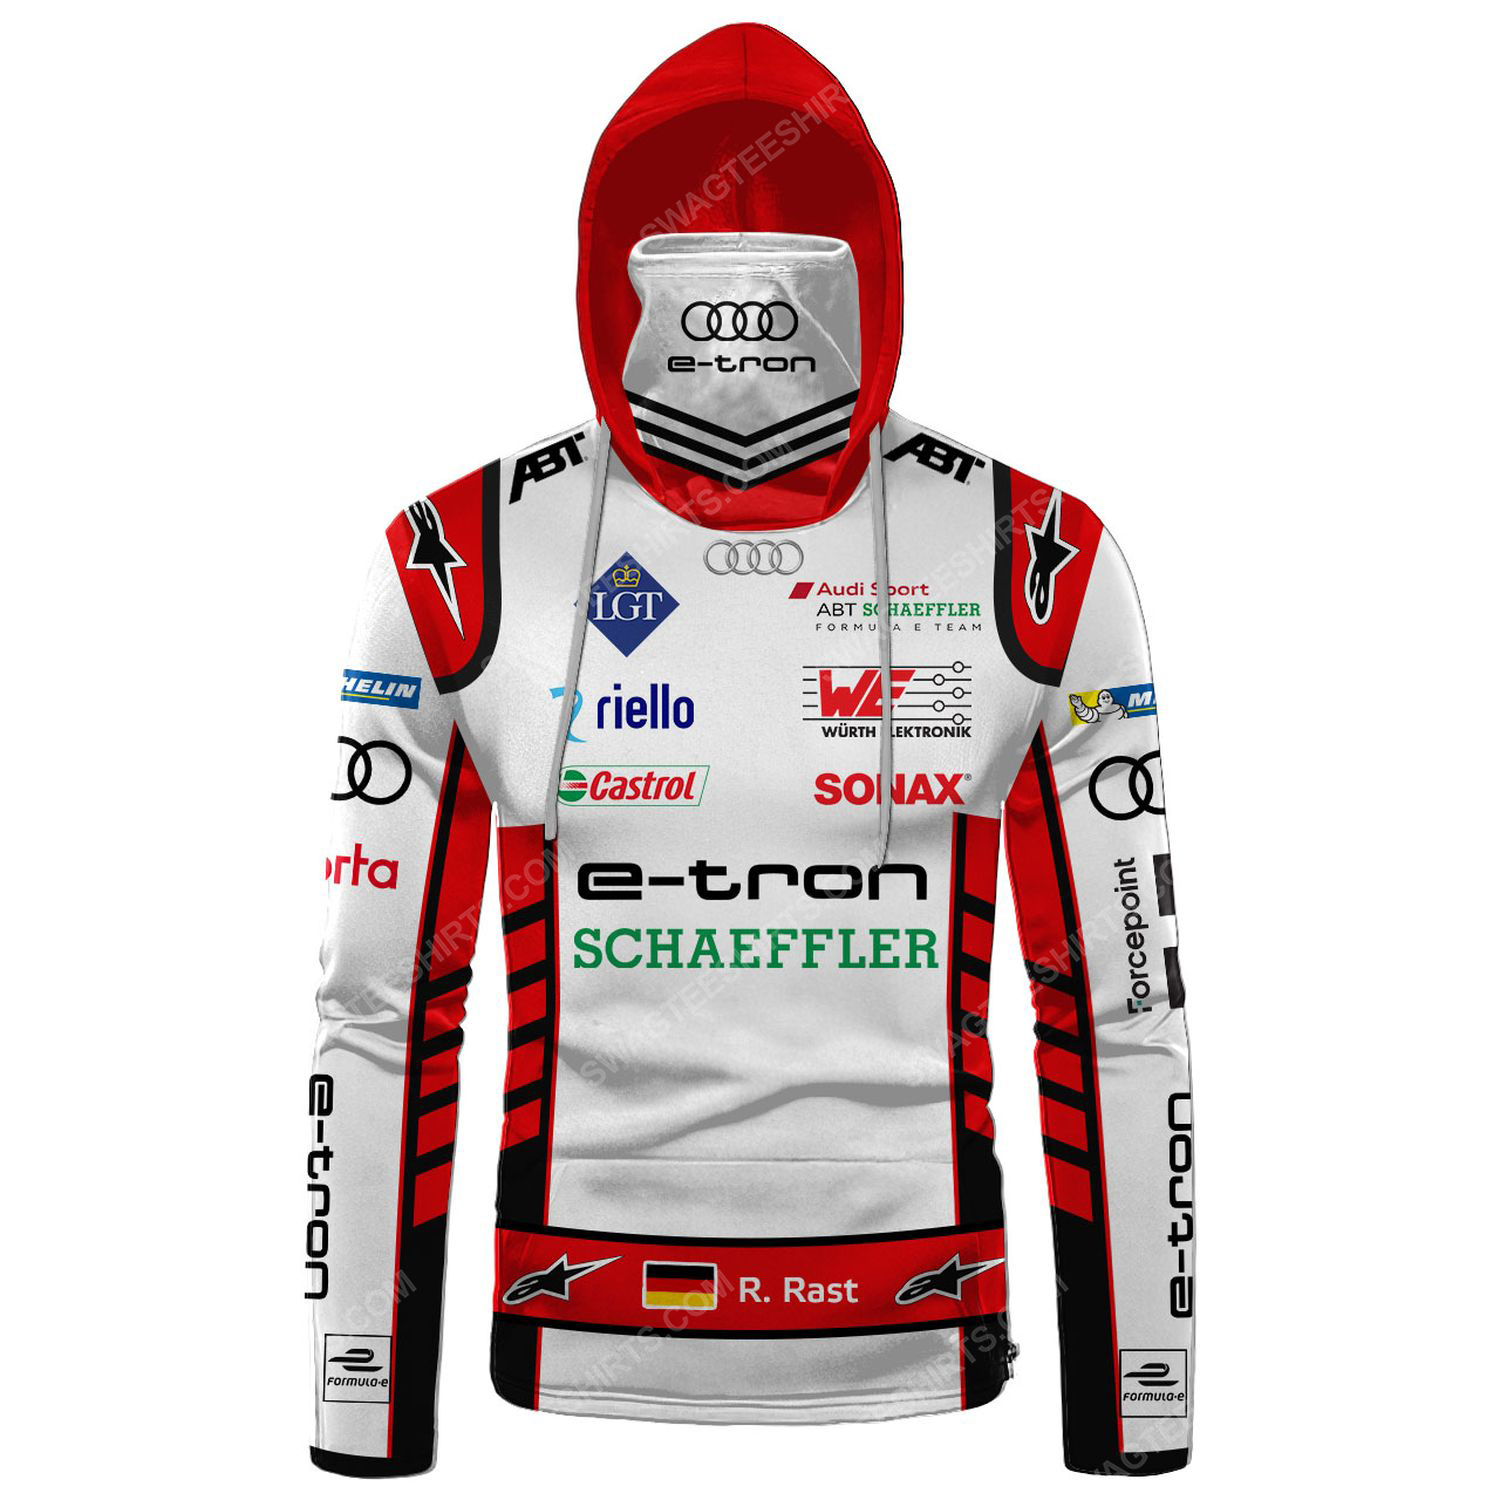 Audi e-tron schwarzer racing team motorsport full printing hoodie mask